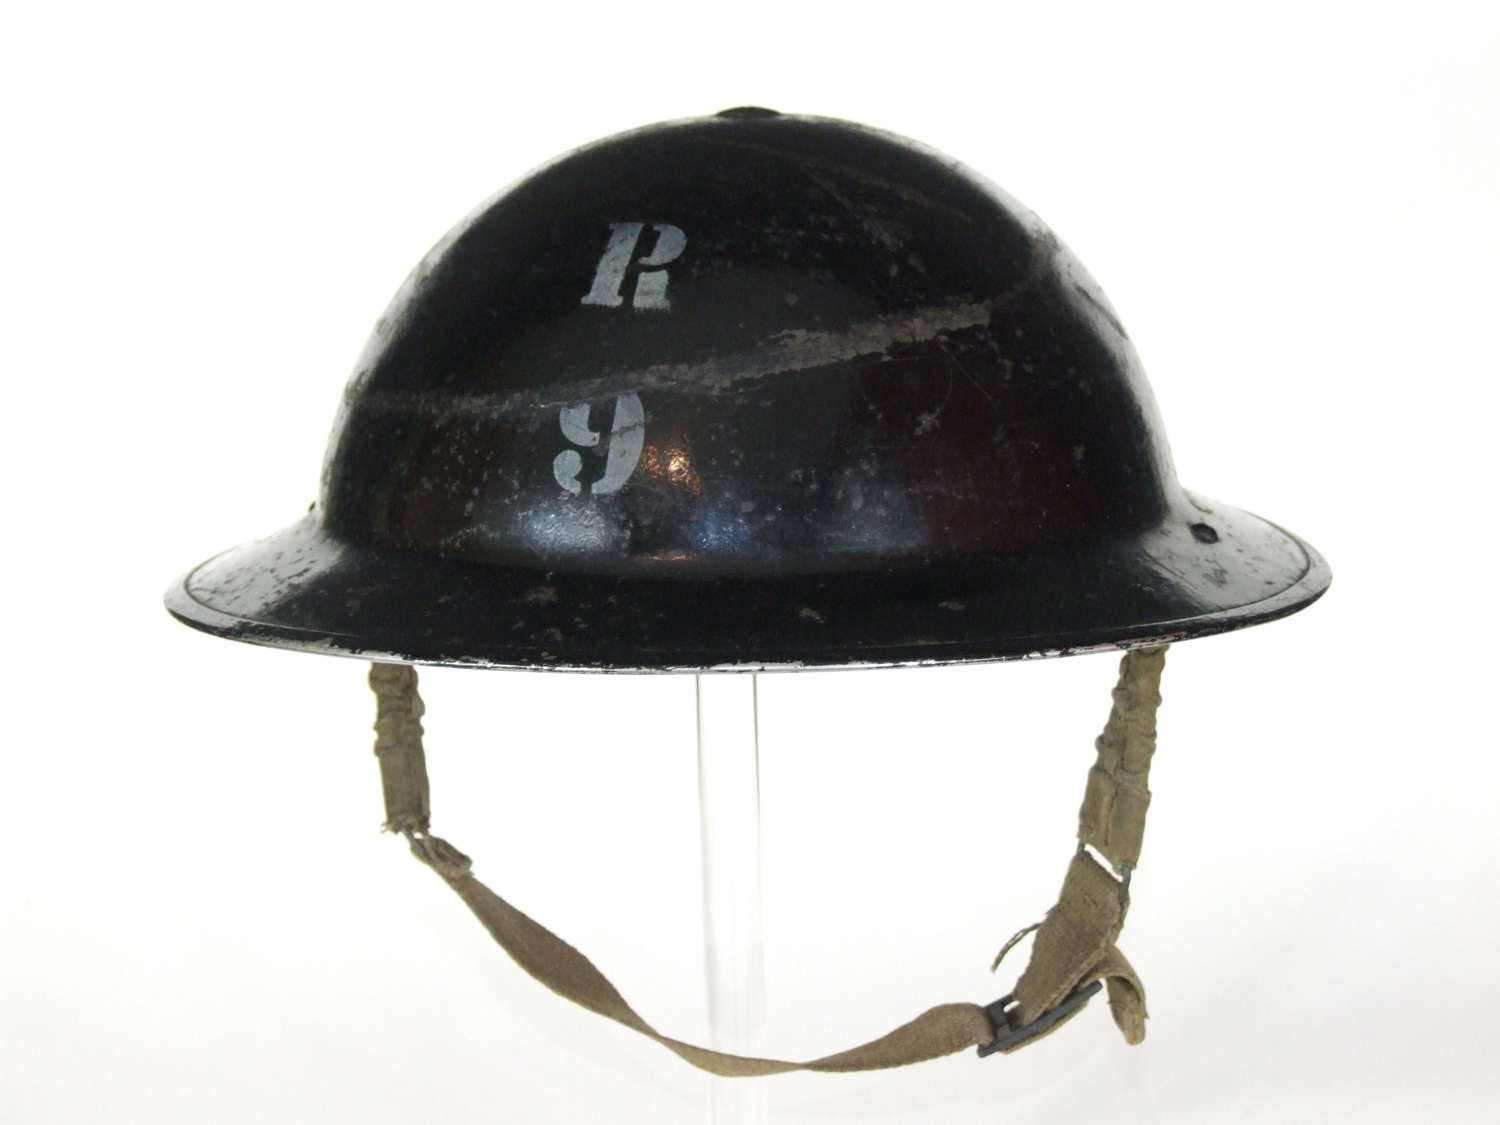 1939 British Home Front Rescue Helmet